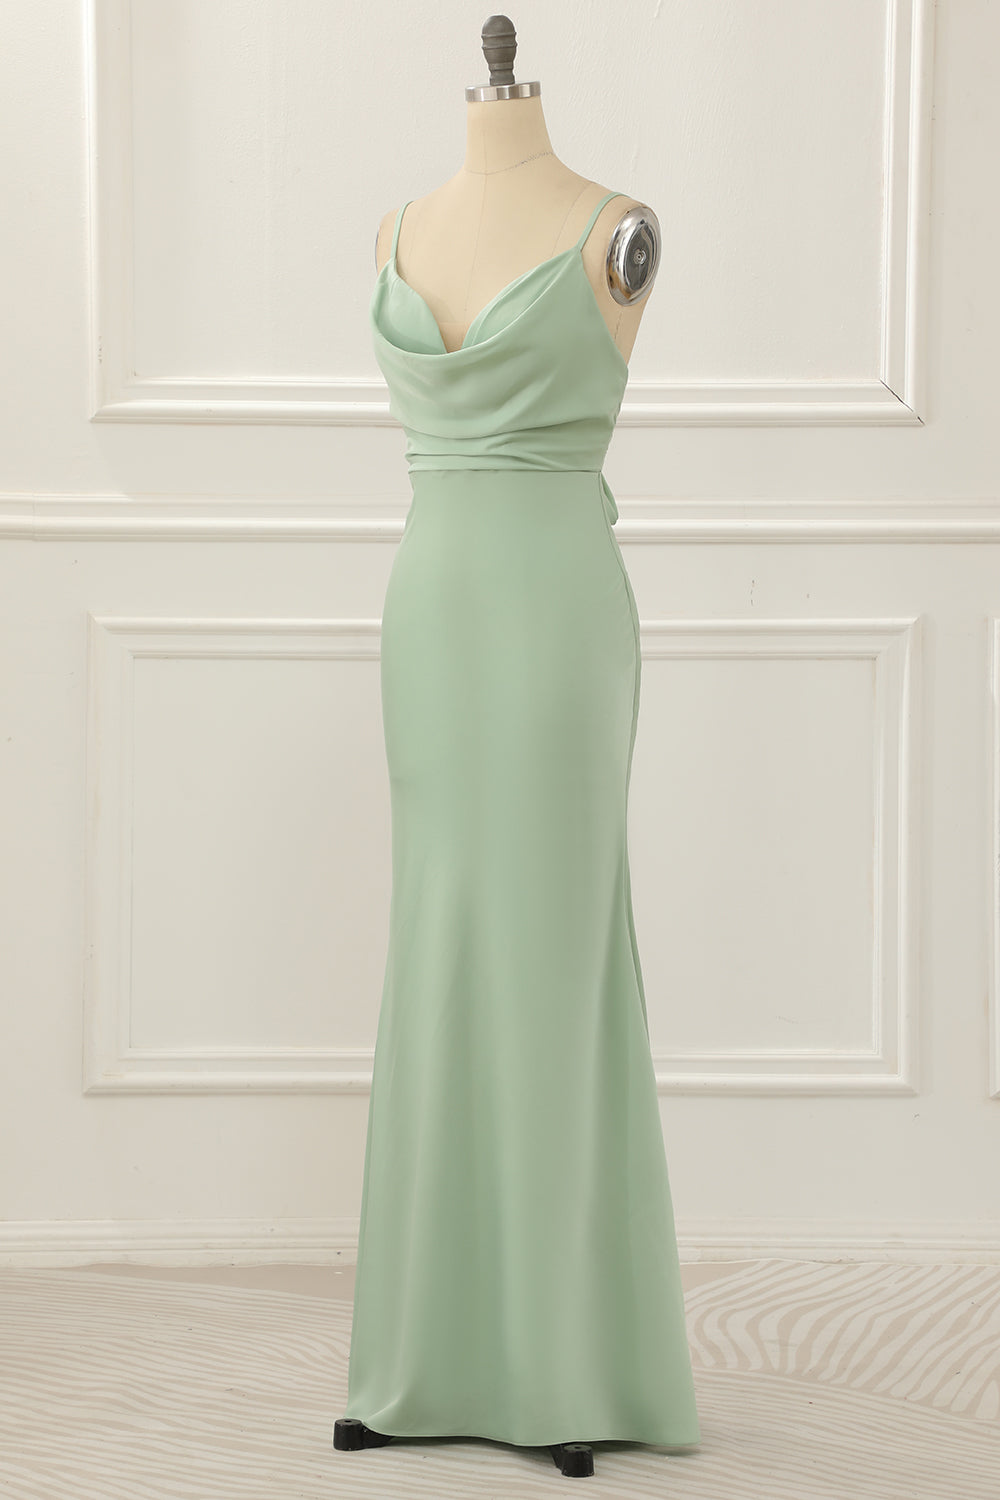 Party Dress Teen, Satin Spaghetti Straps Light Green Bridesmaid Dress